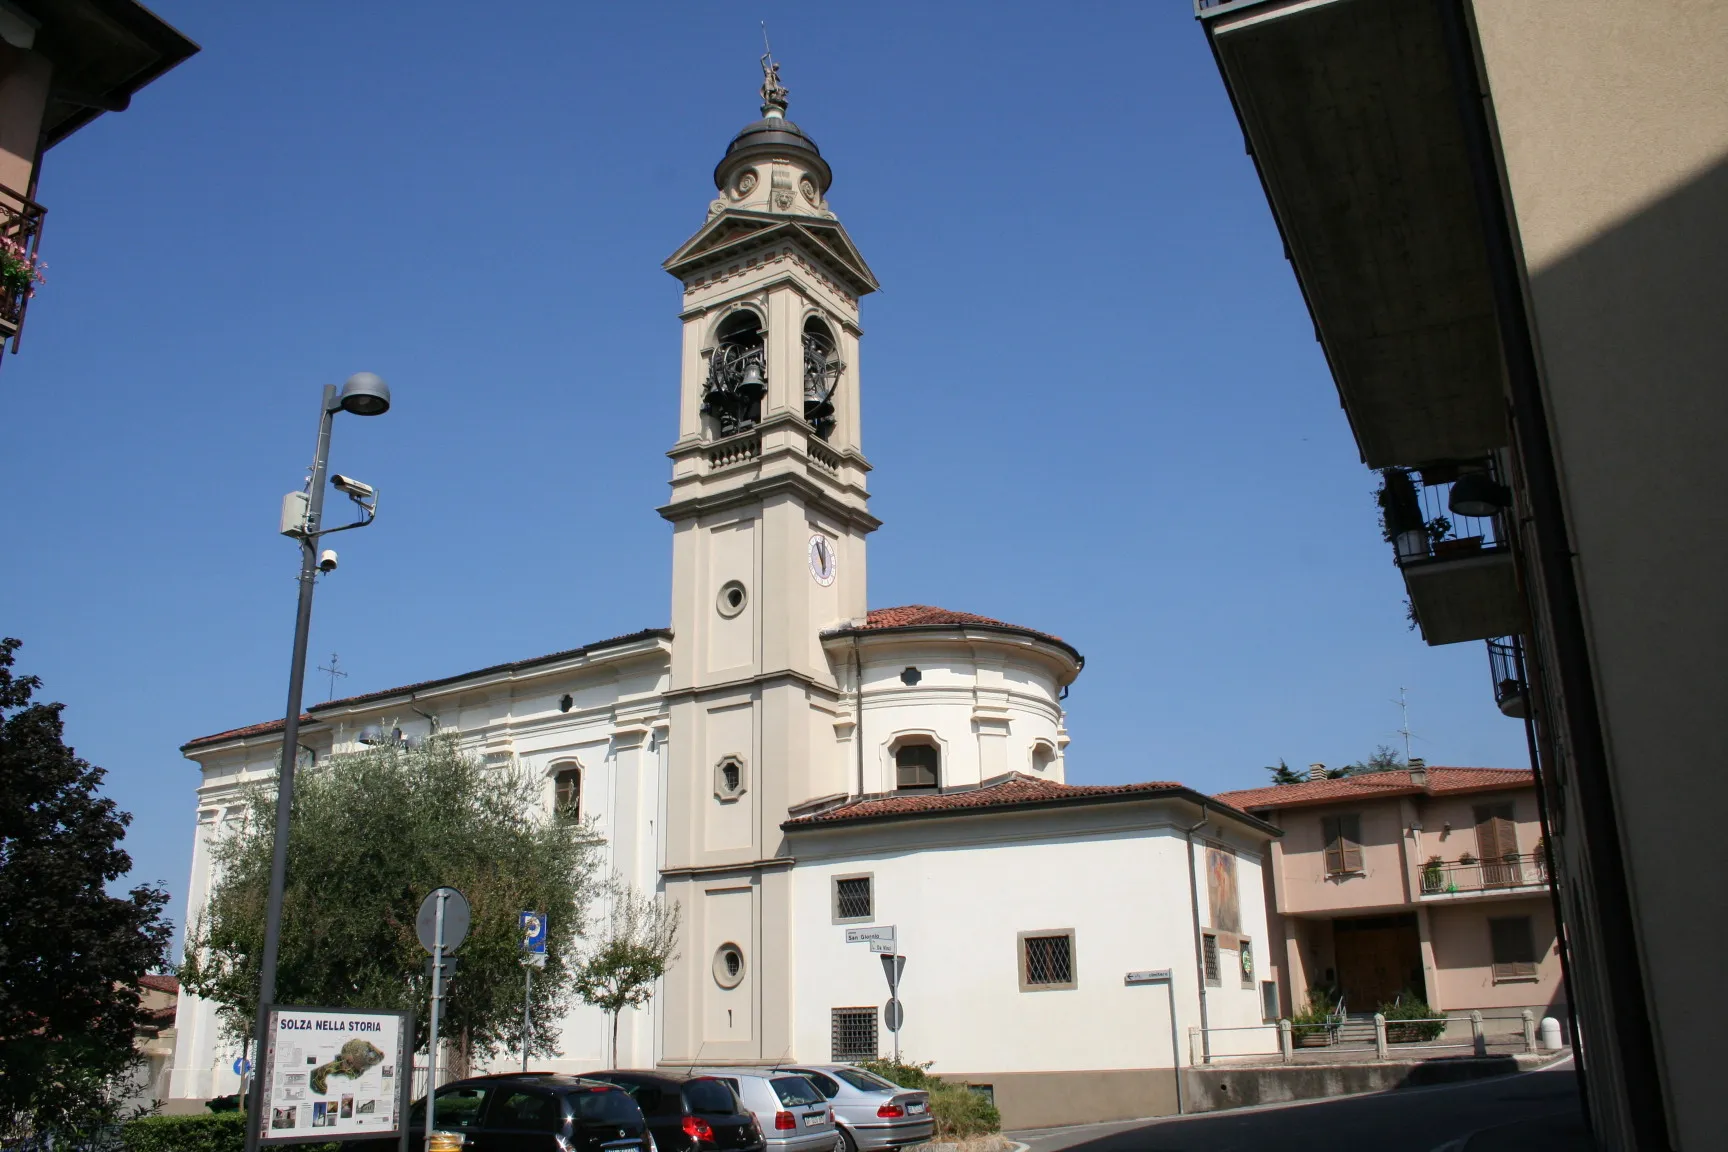 Photo showing: Solza, Bergamo, San Giorgio.